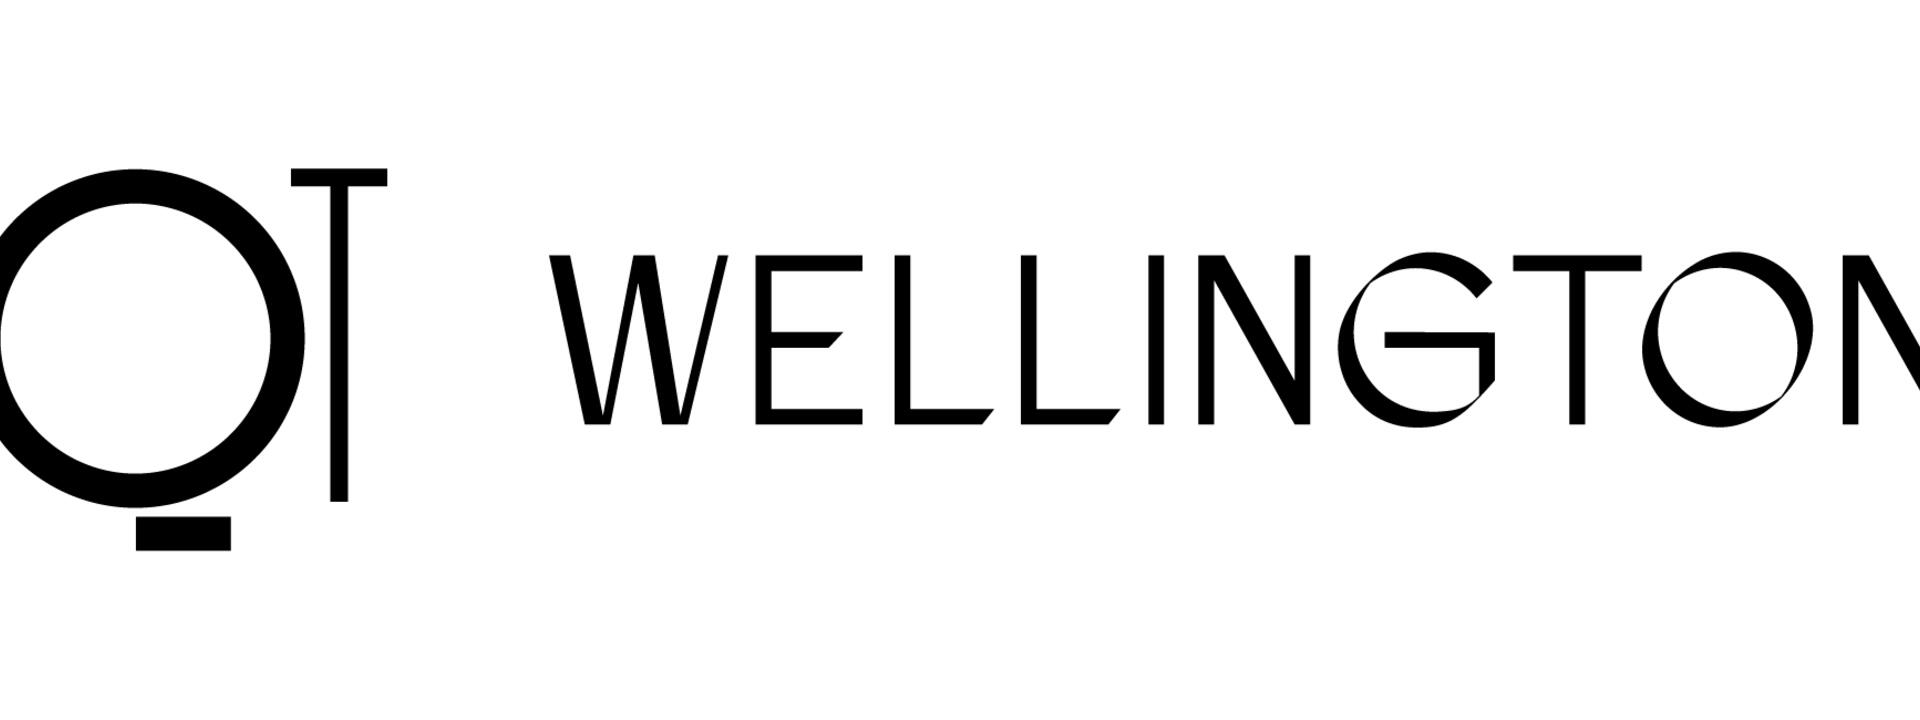 qt-wellington-logo-01-black-rgb.JPG